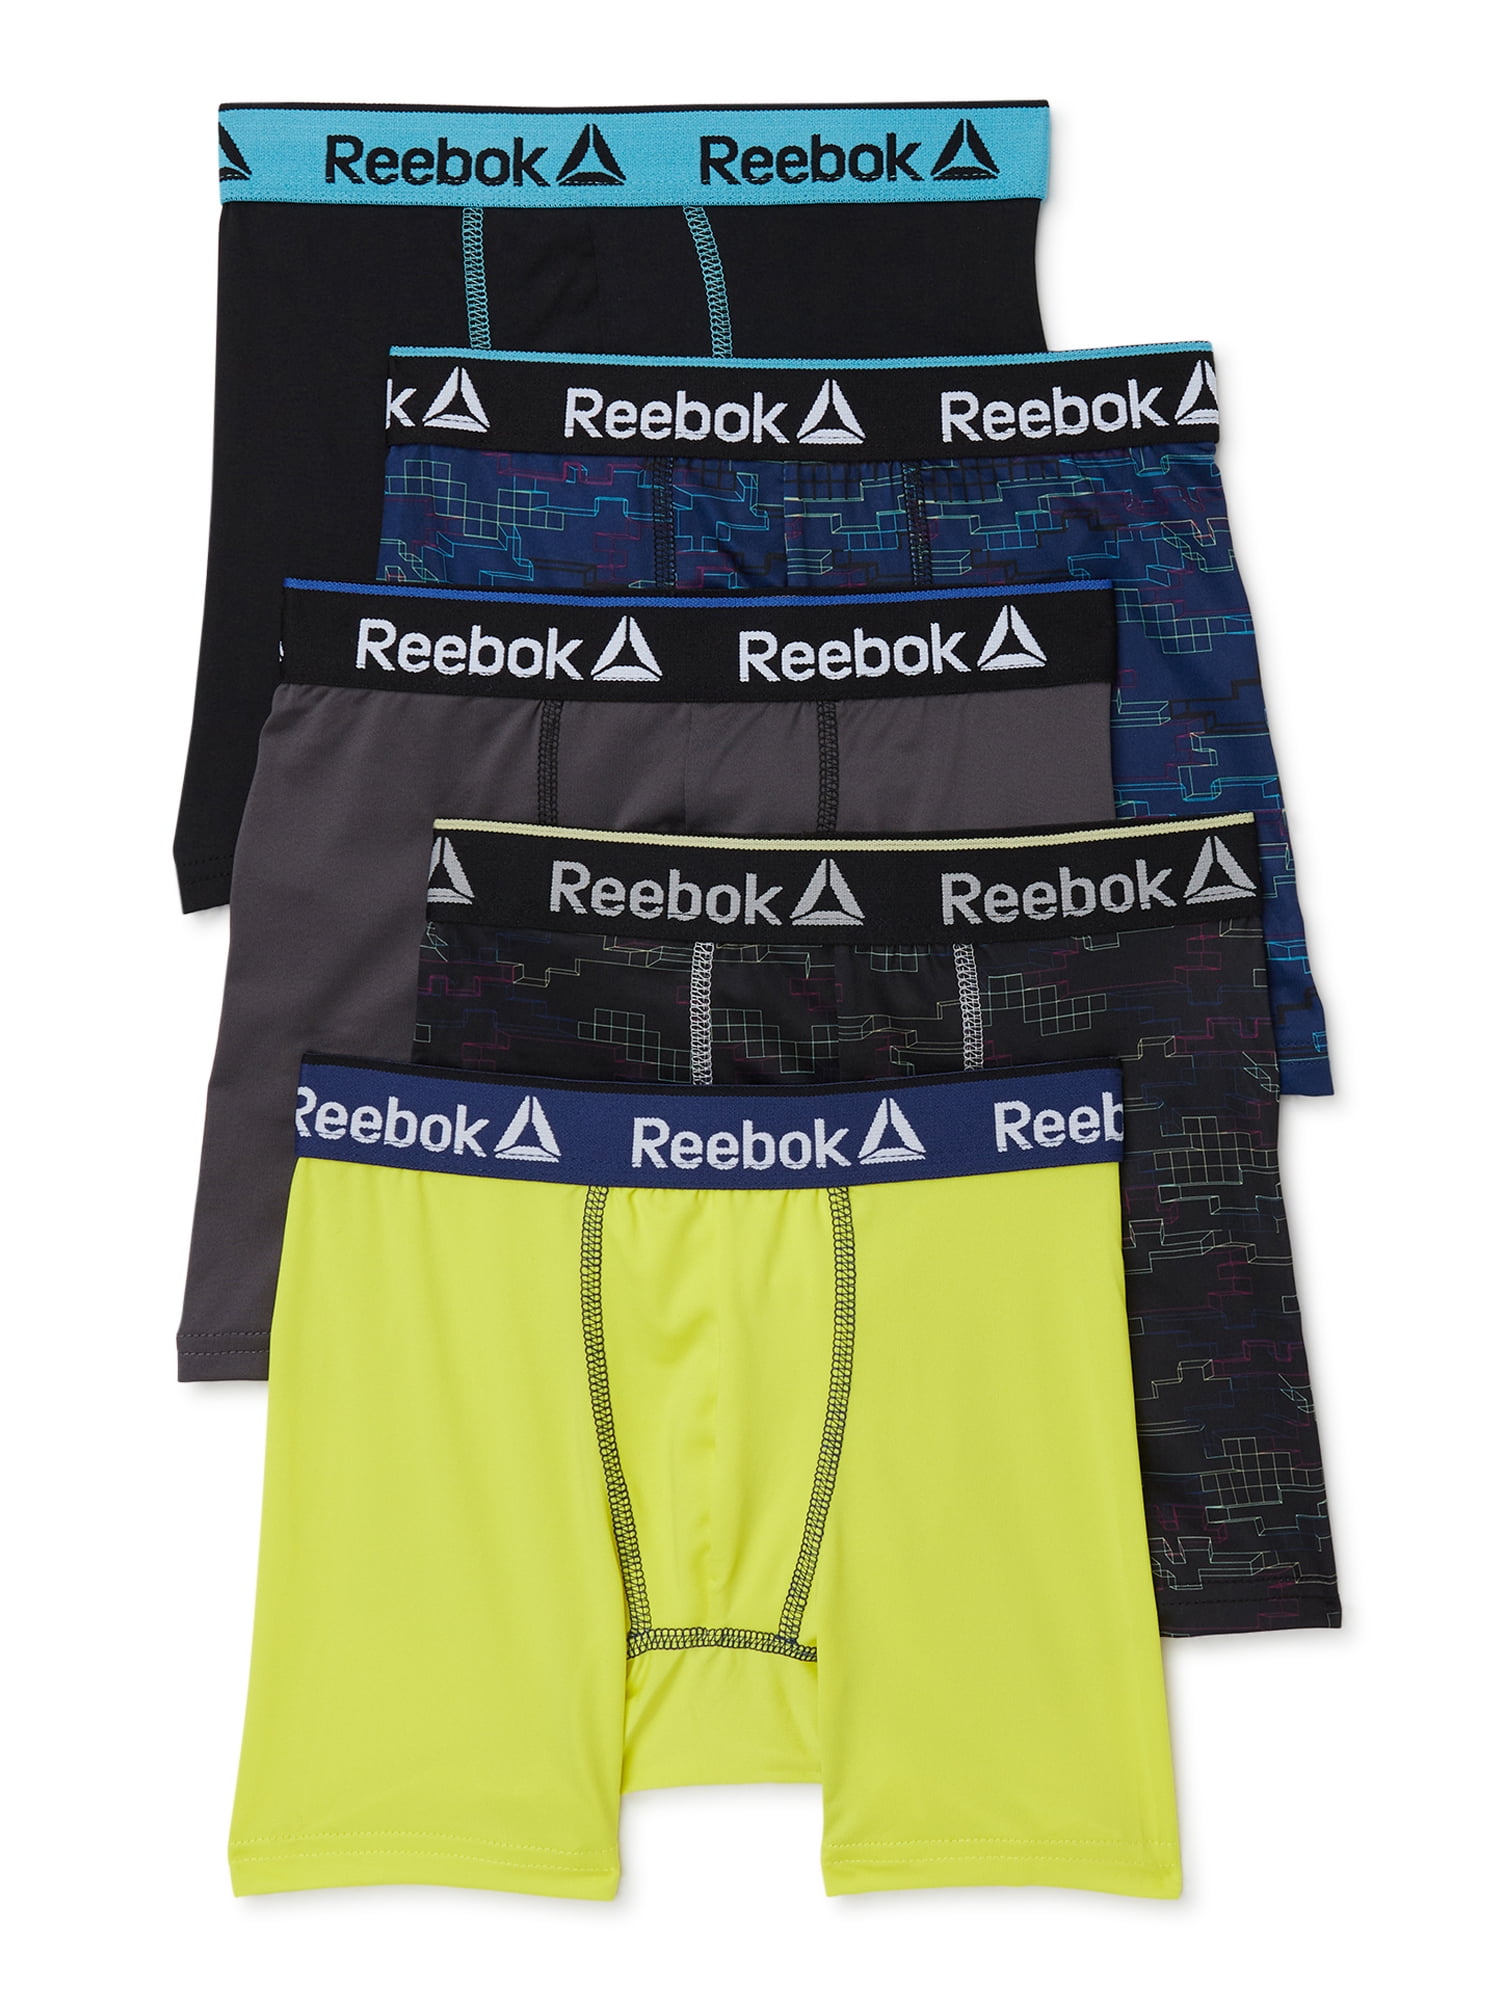 Reebok 2-Pack Sports Performance Boxer Briefs, Black